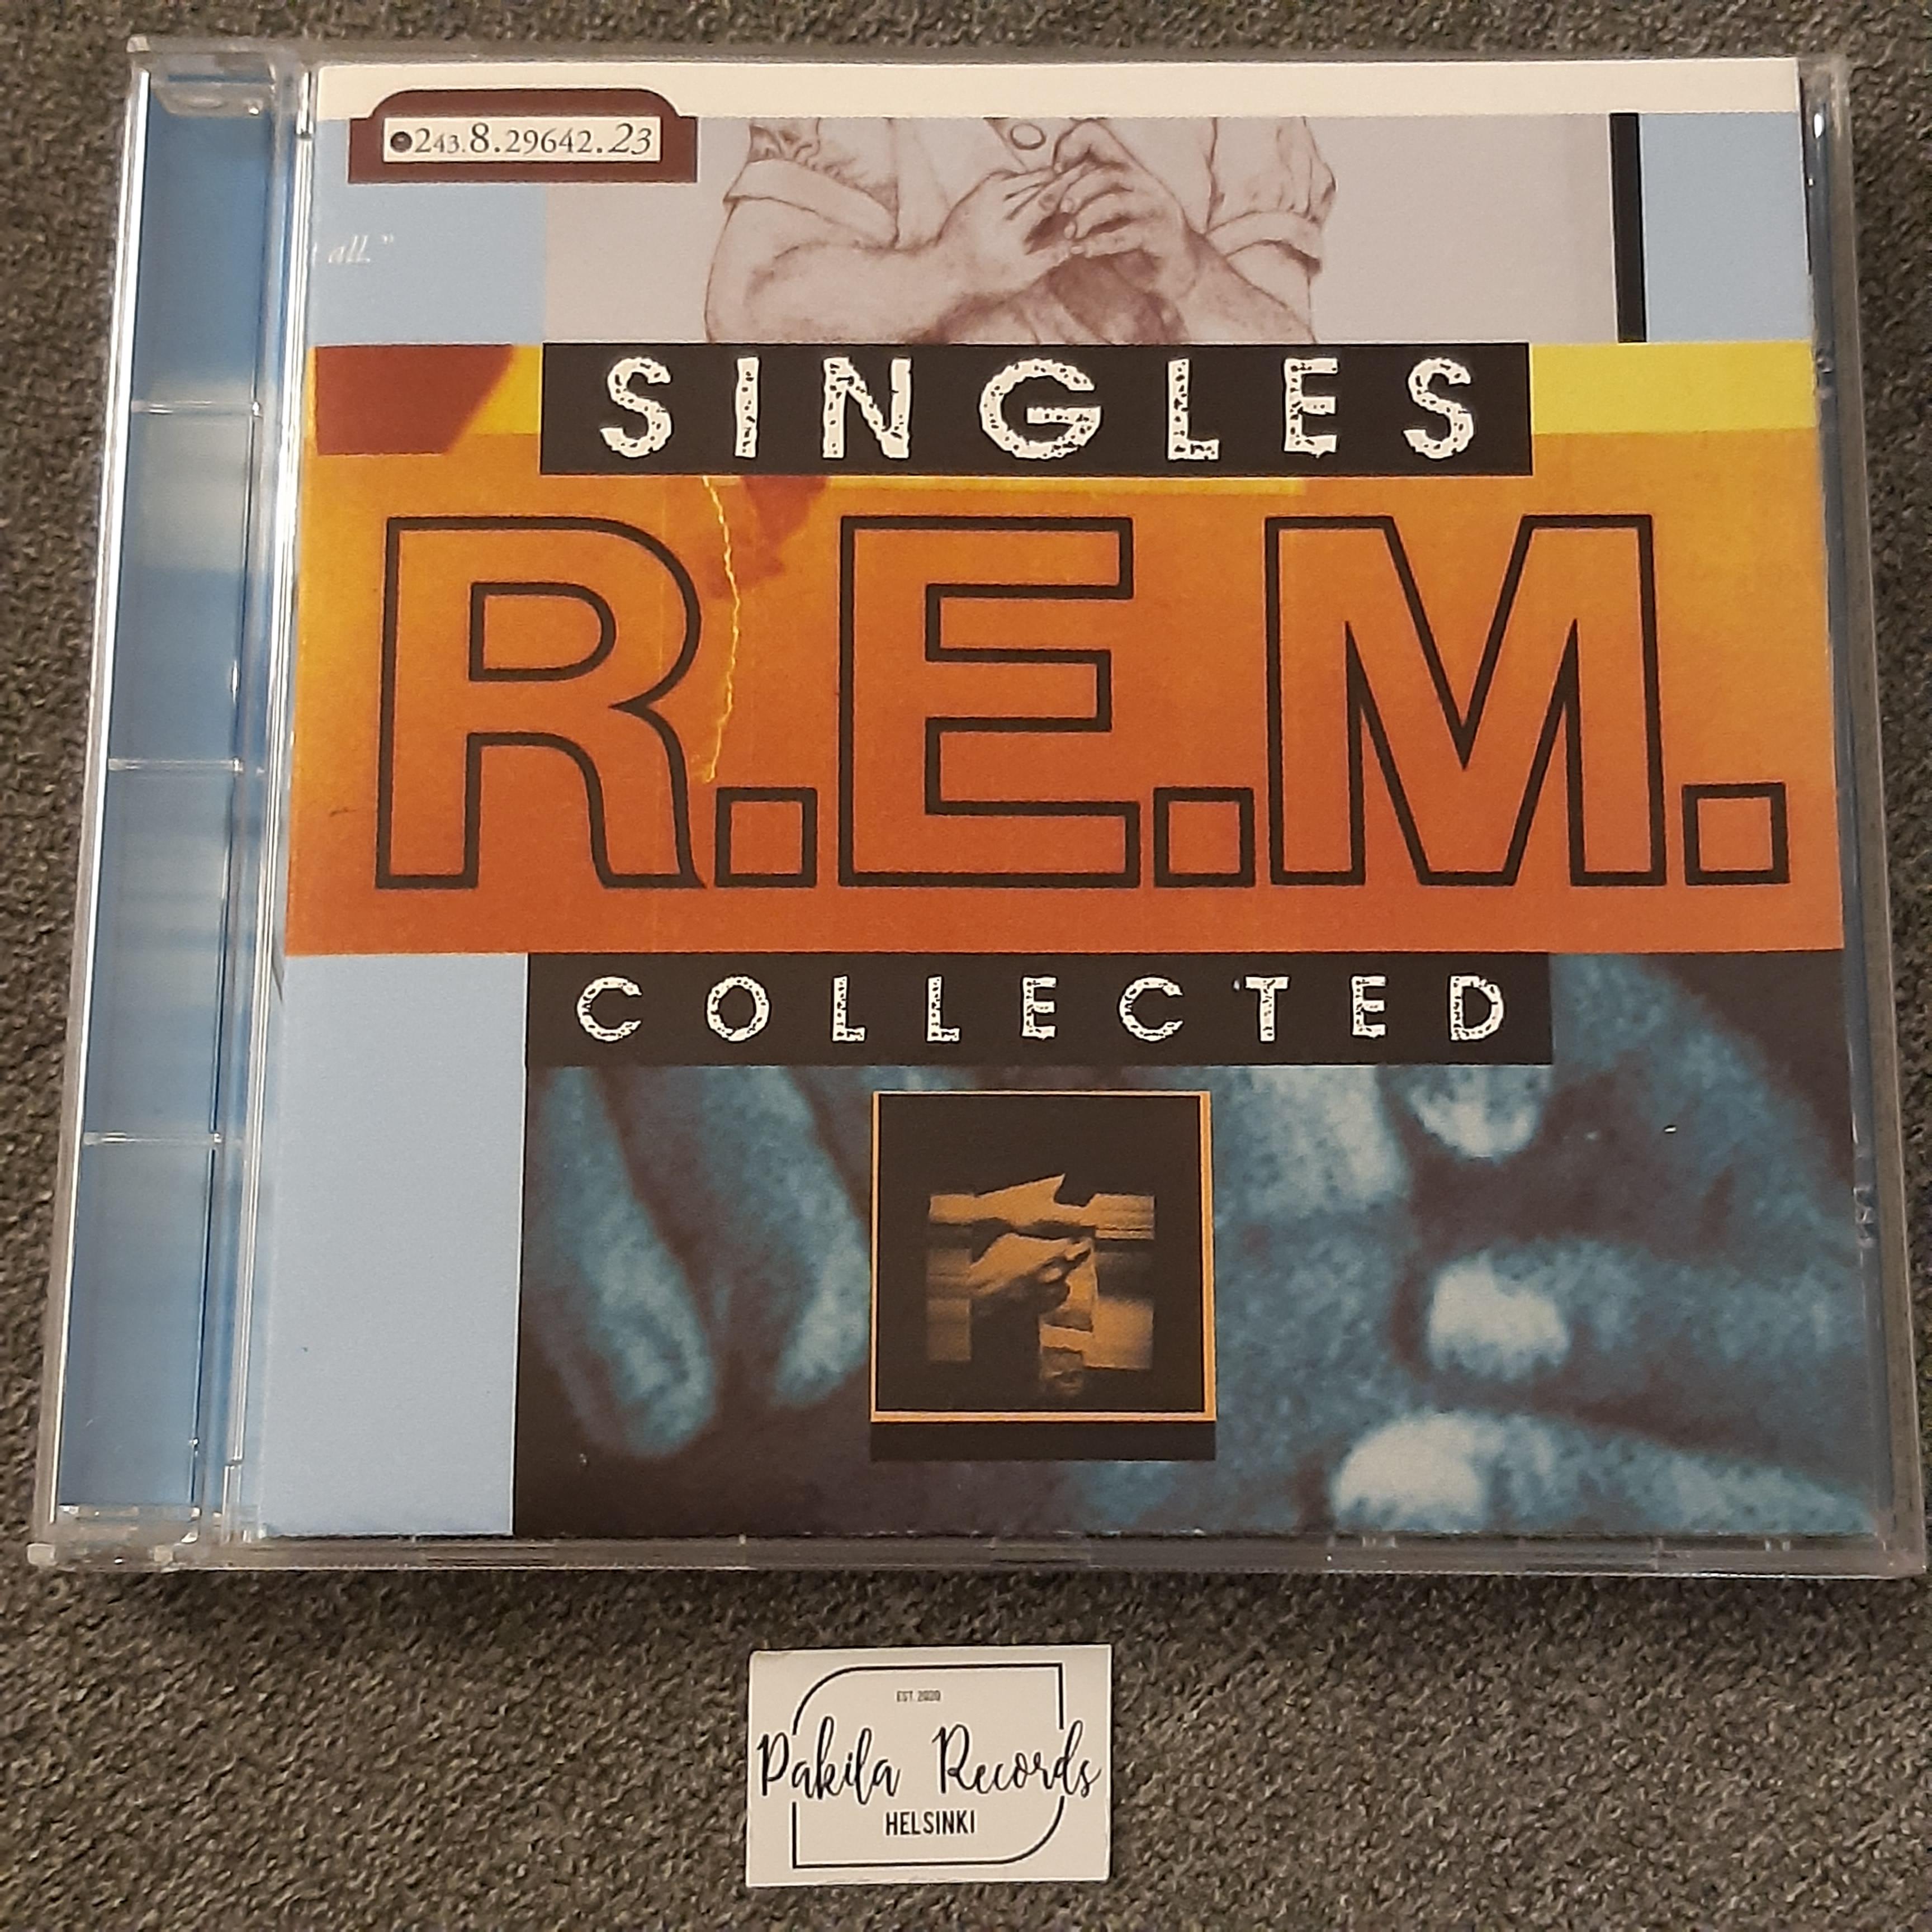 R.E.M. - Singles Collected - CD (käytetty)